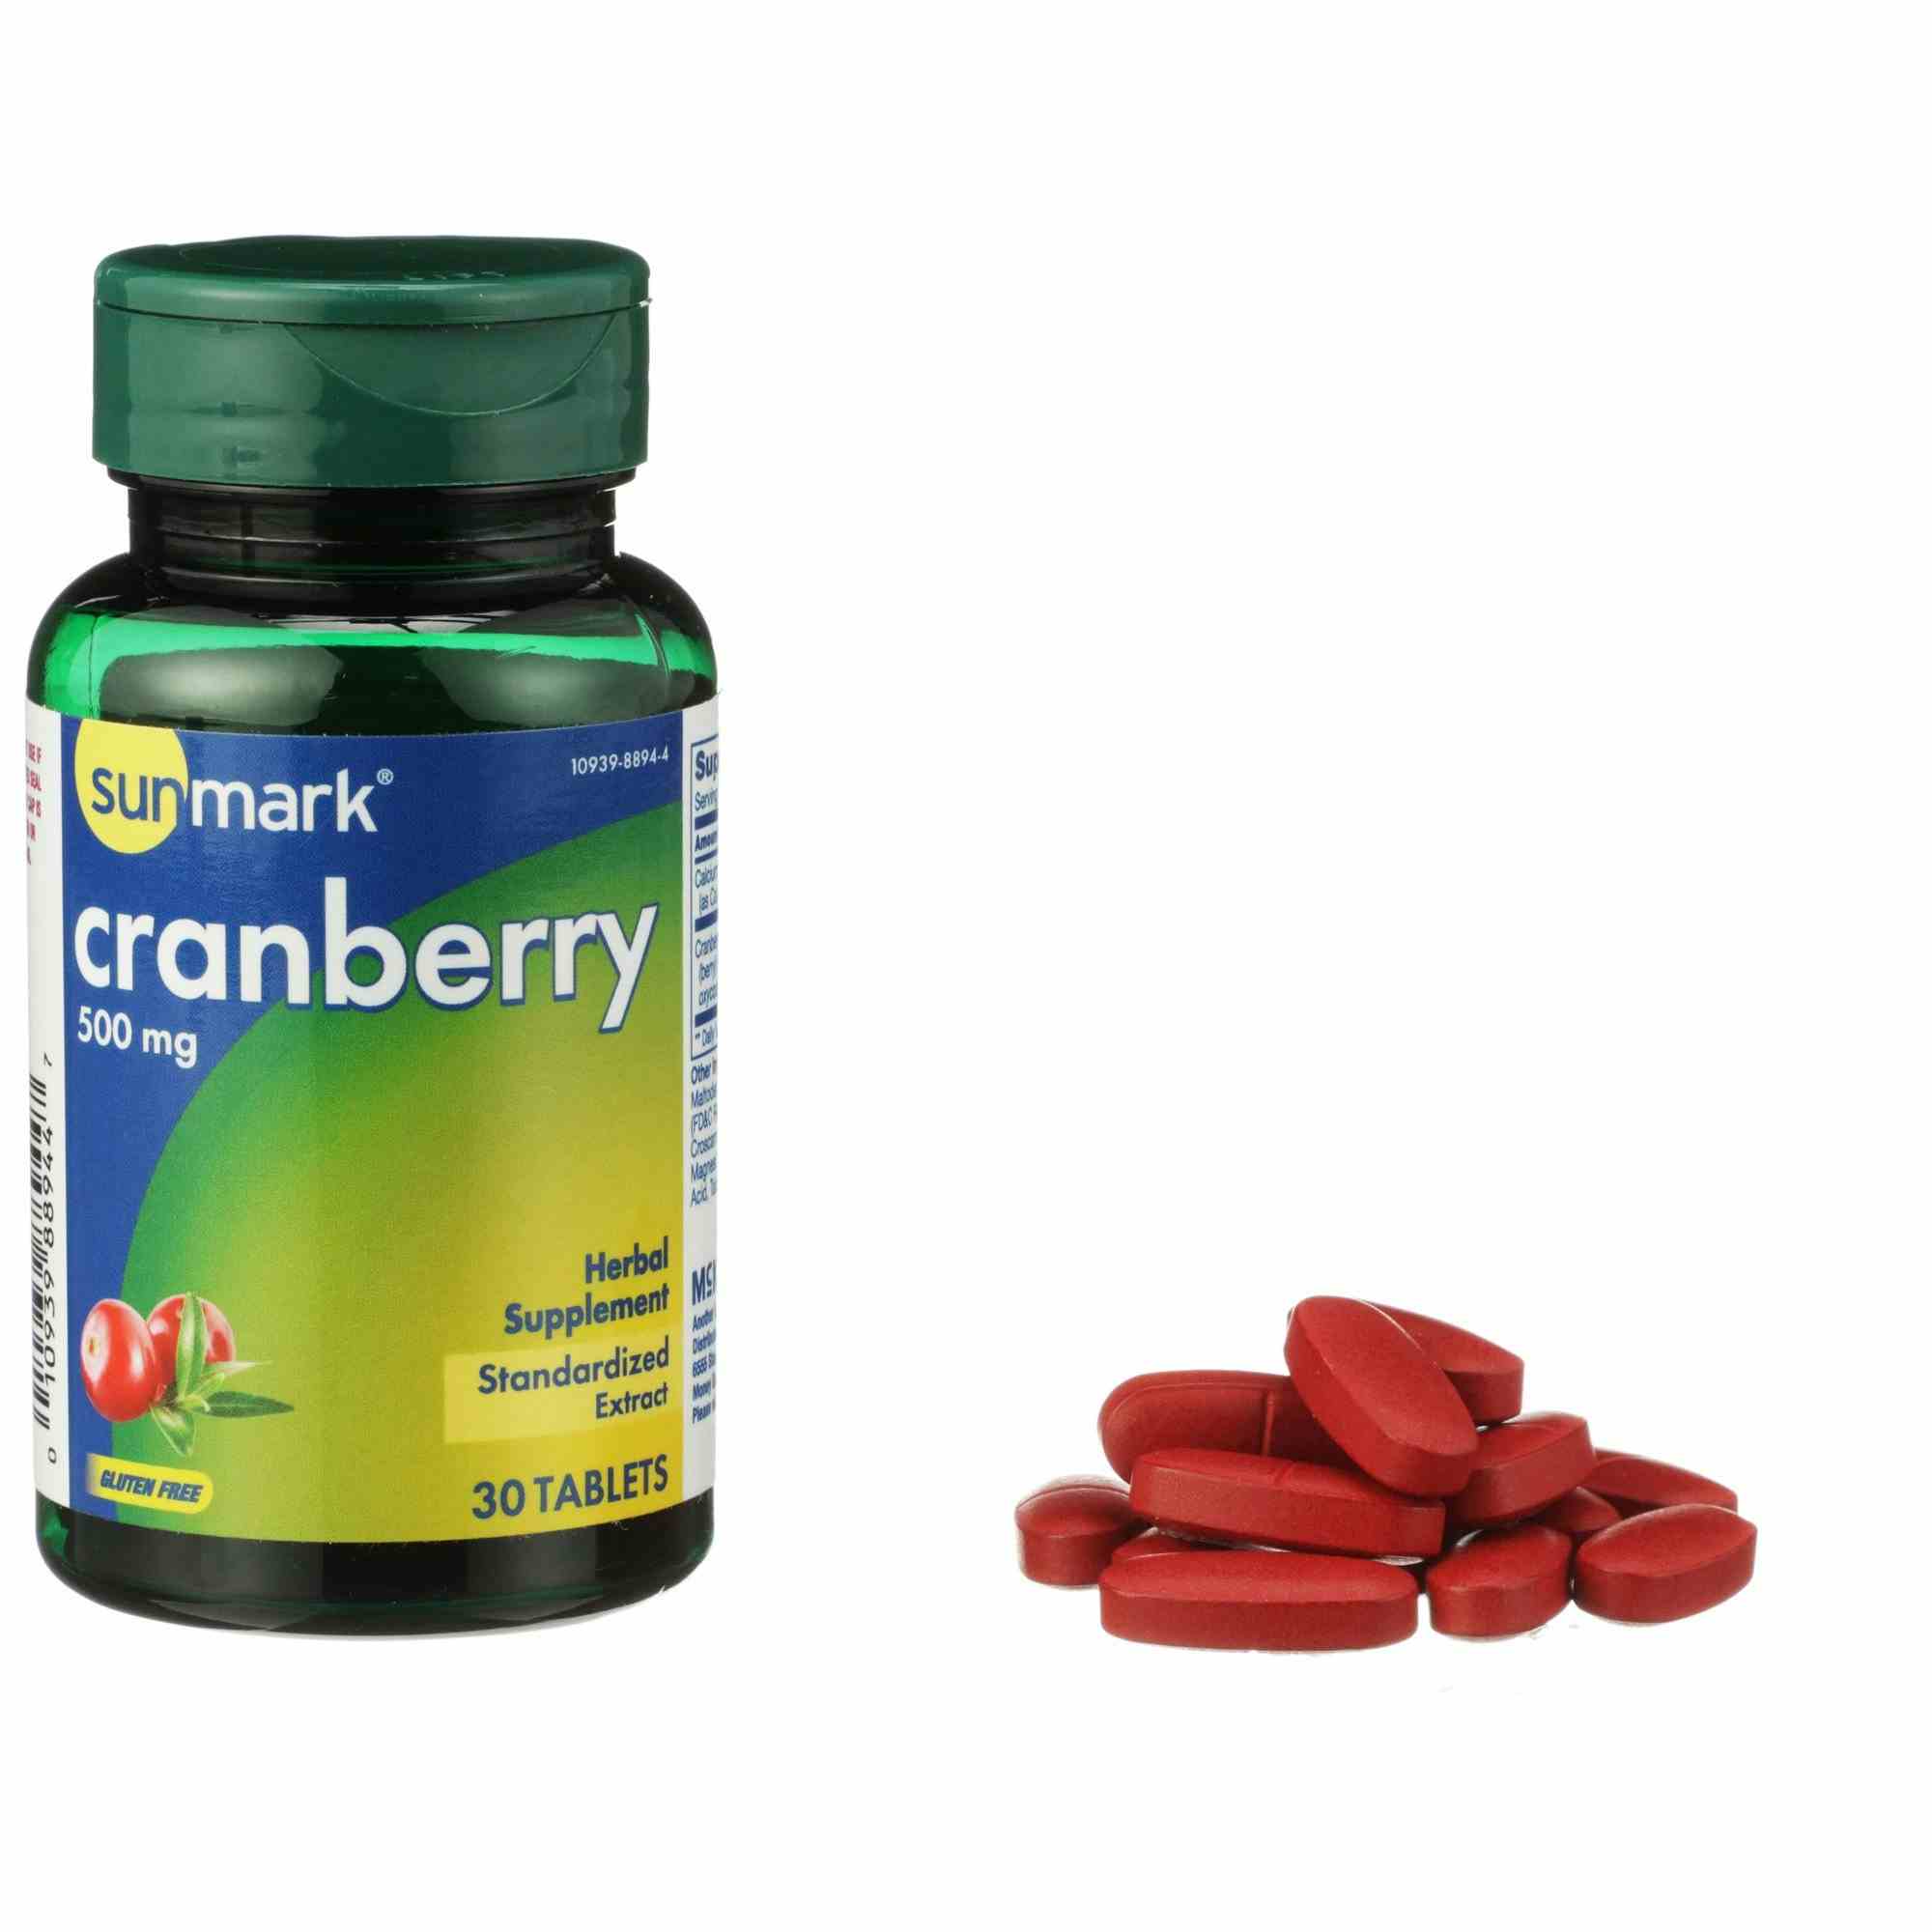 Sunmark Cranberry Herbal Supplement, 500 mg, 36 Tablets, 01093988944, 1 Bottle